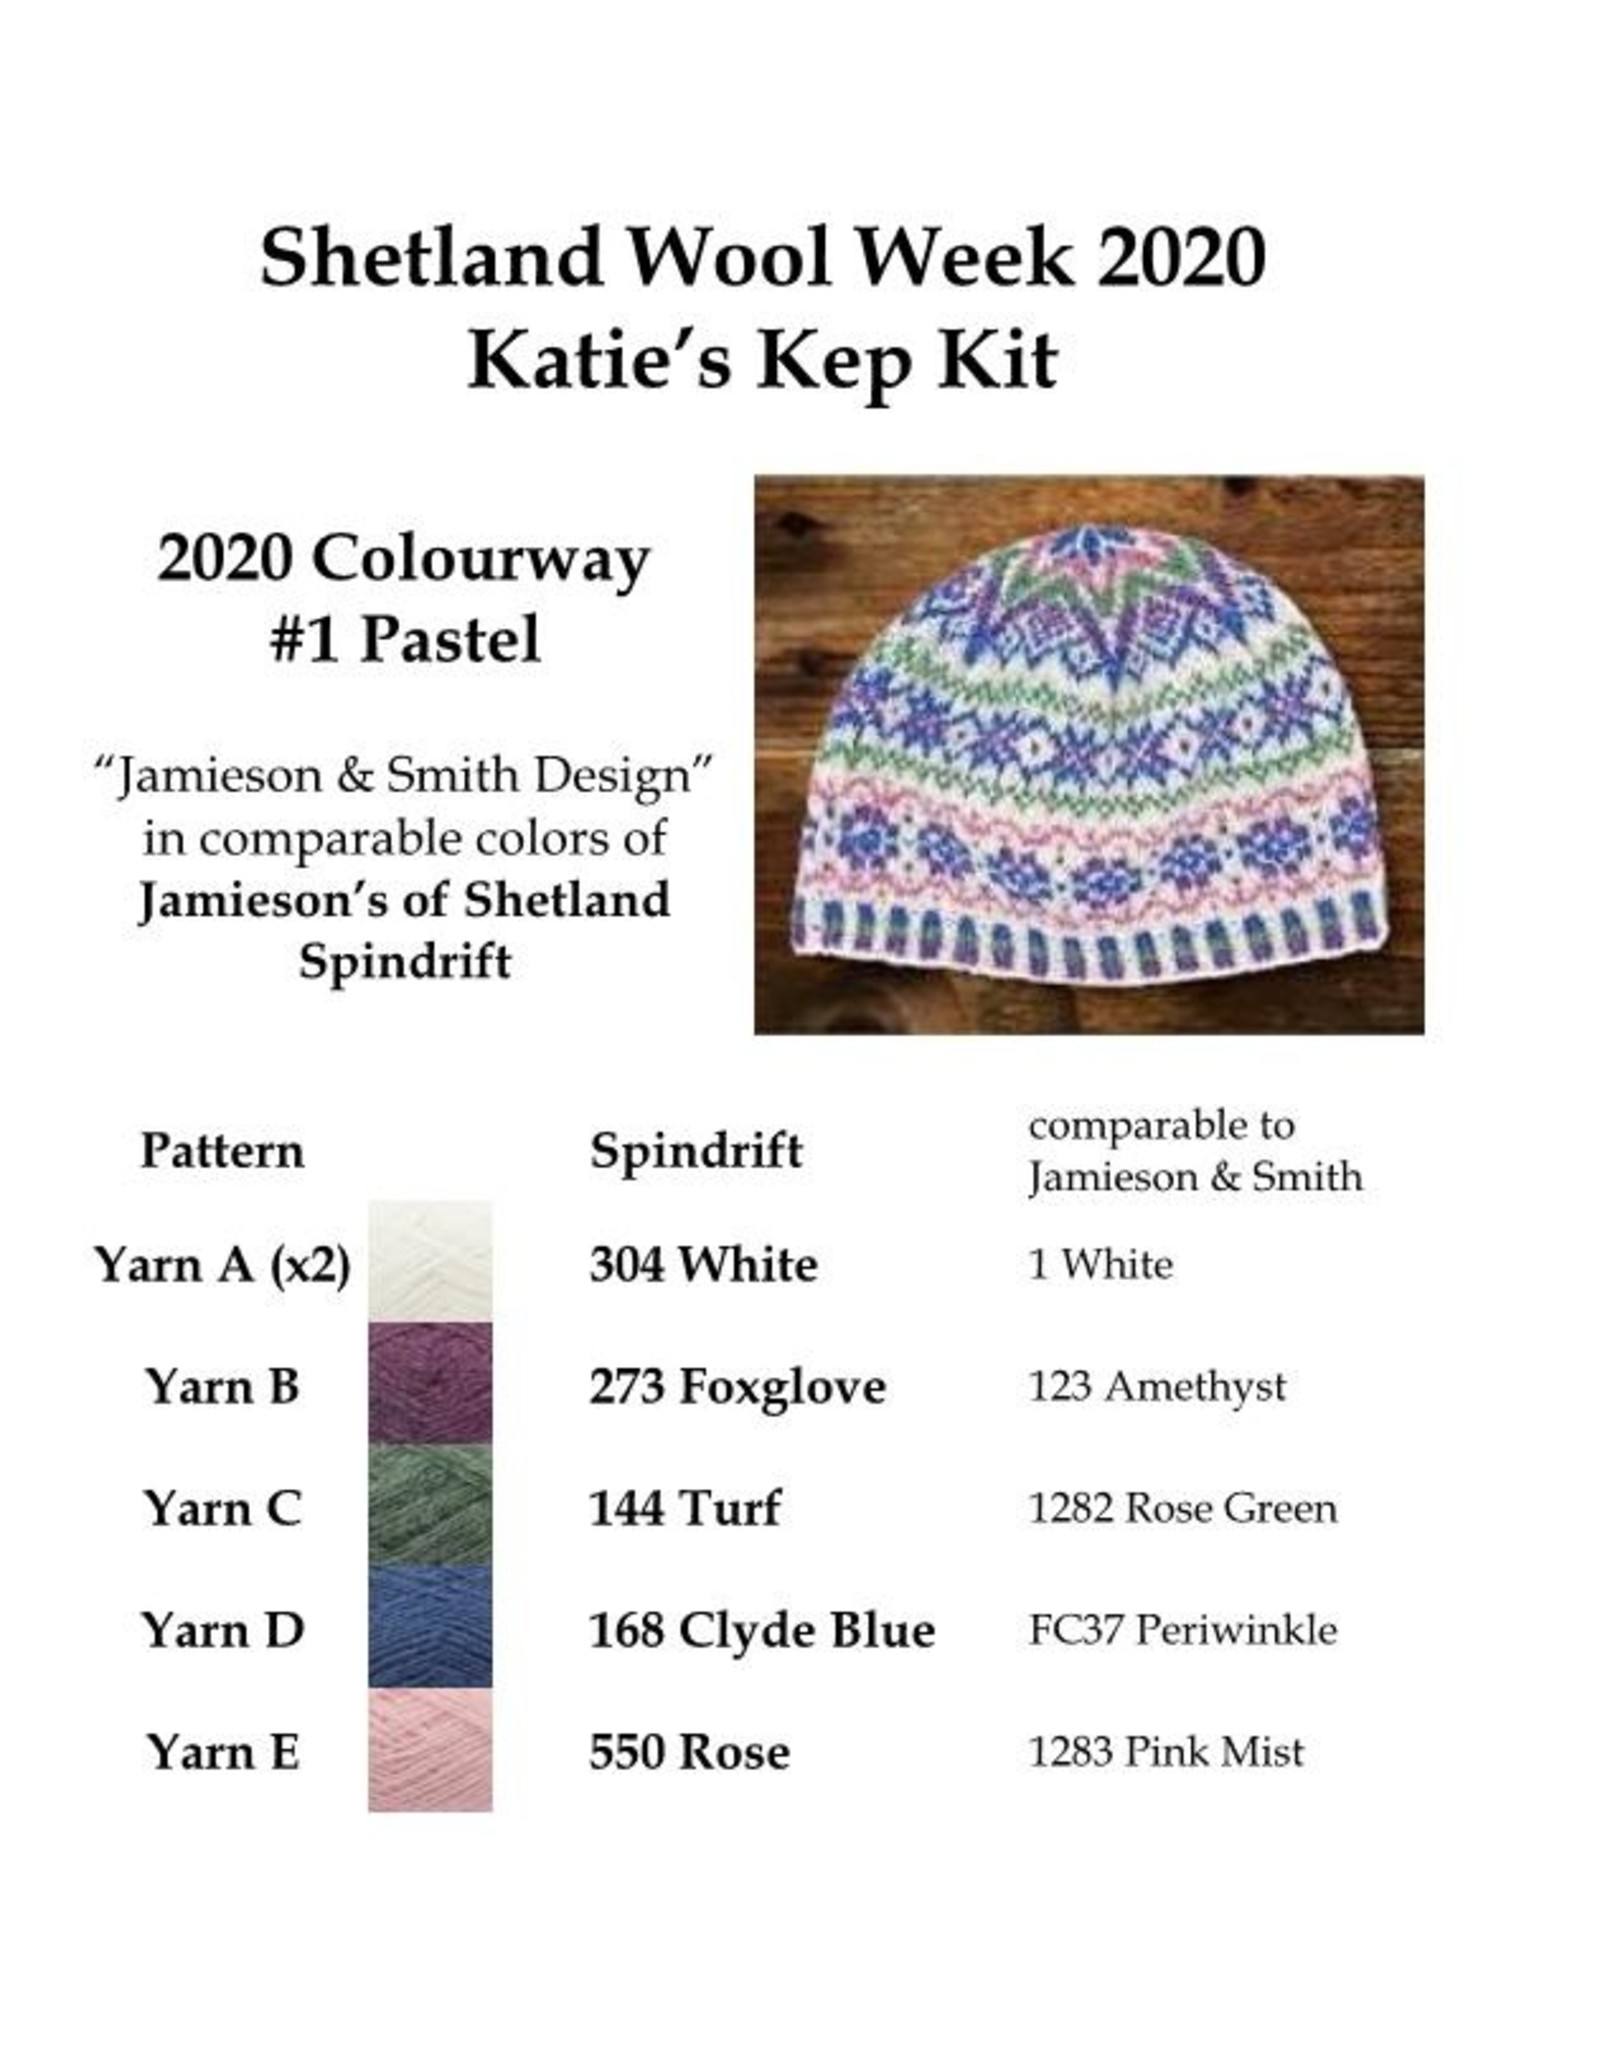 Jamieson's of Shetland Shetland Wool Week Kit 2020